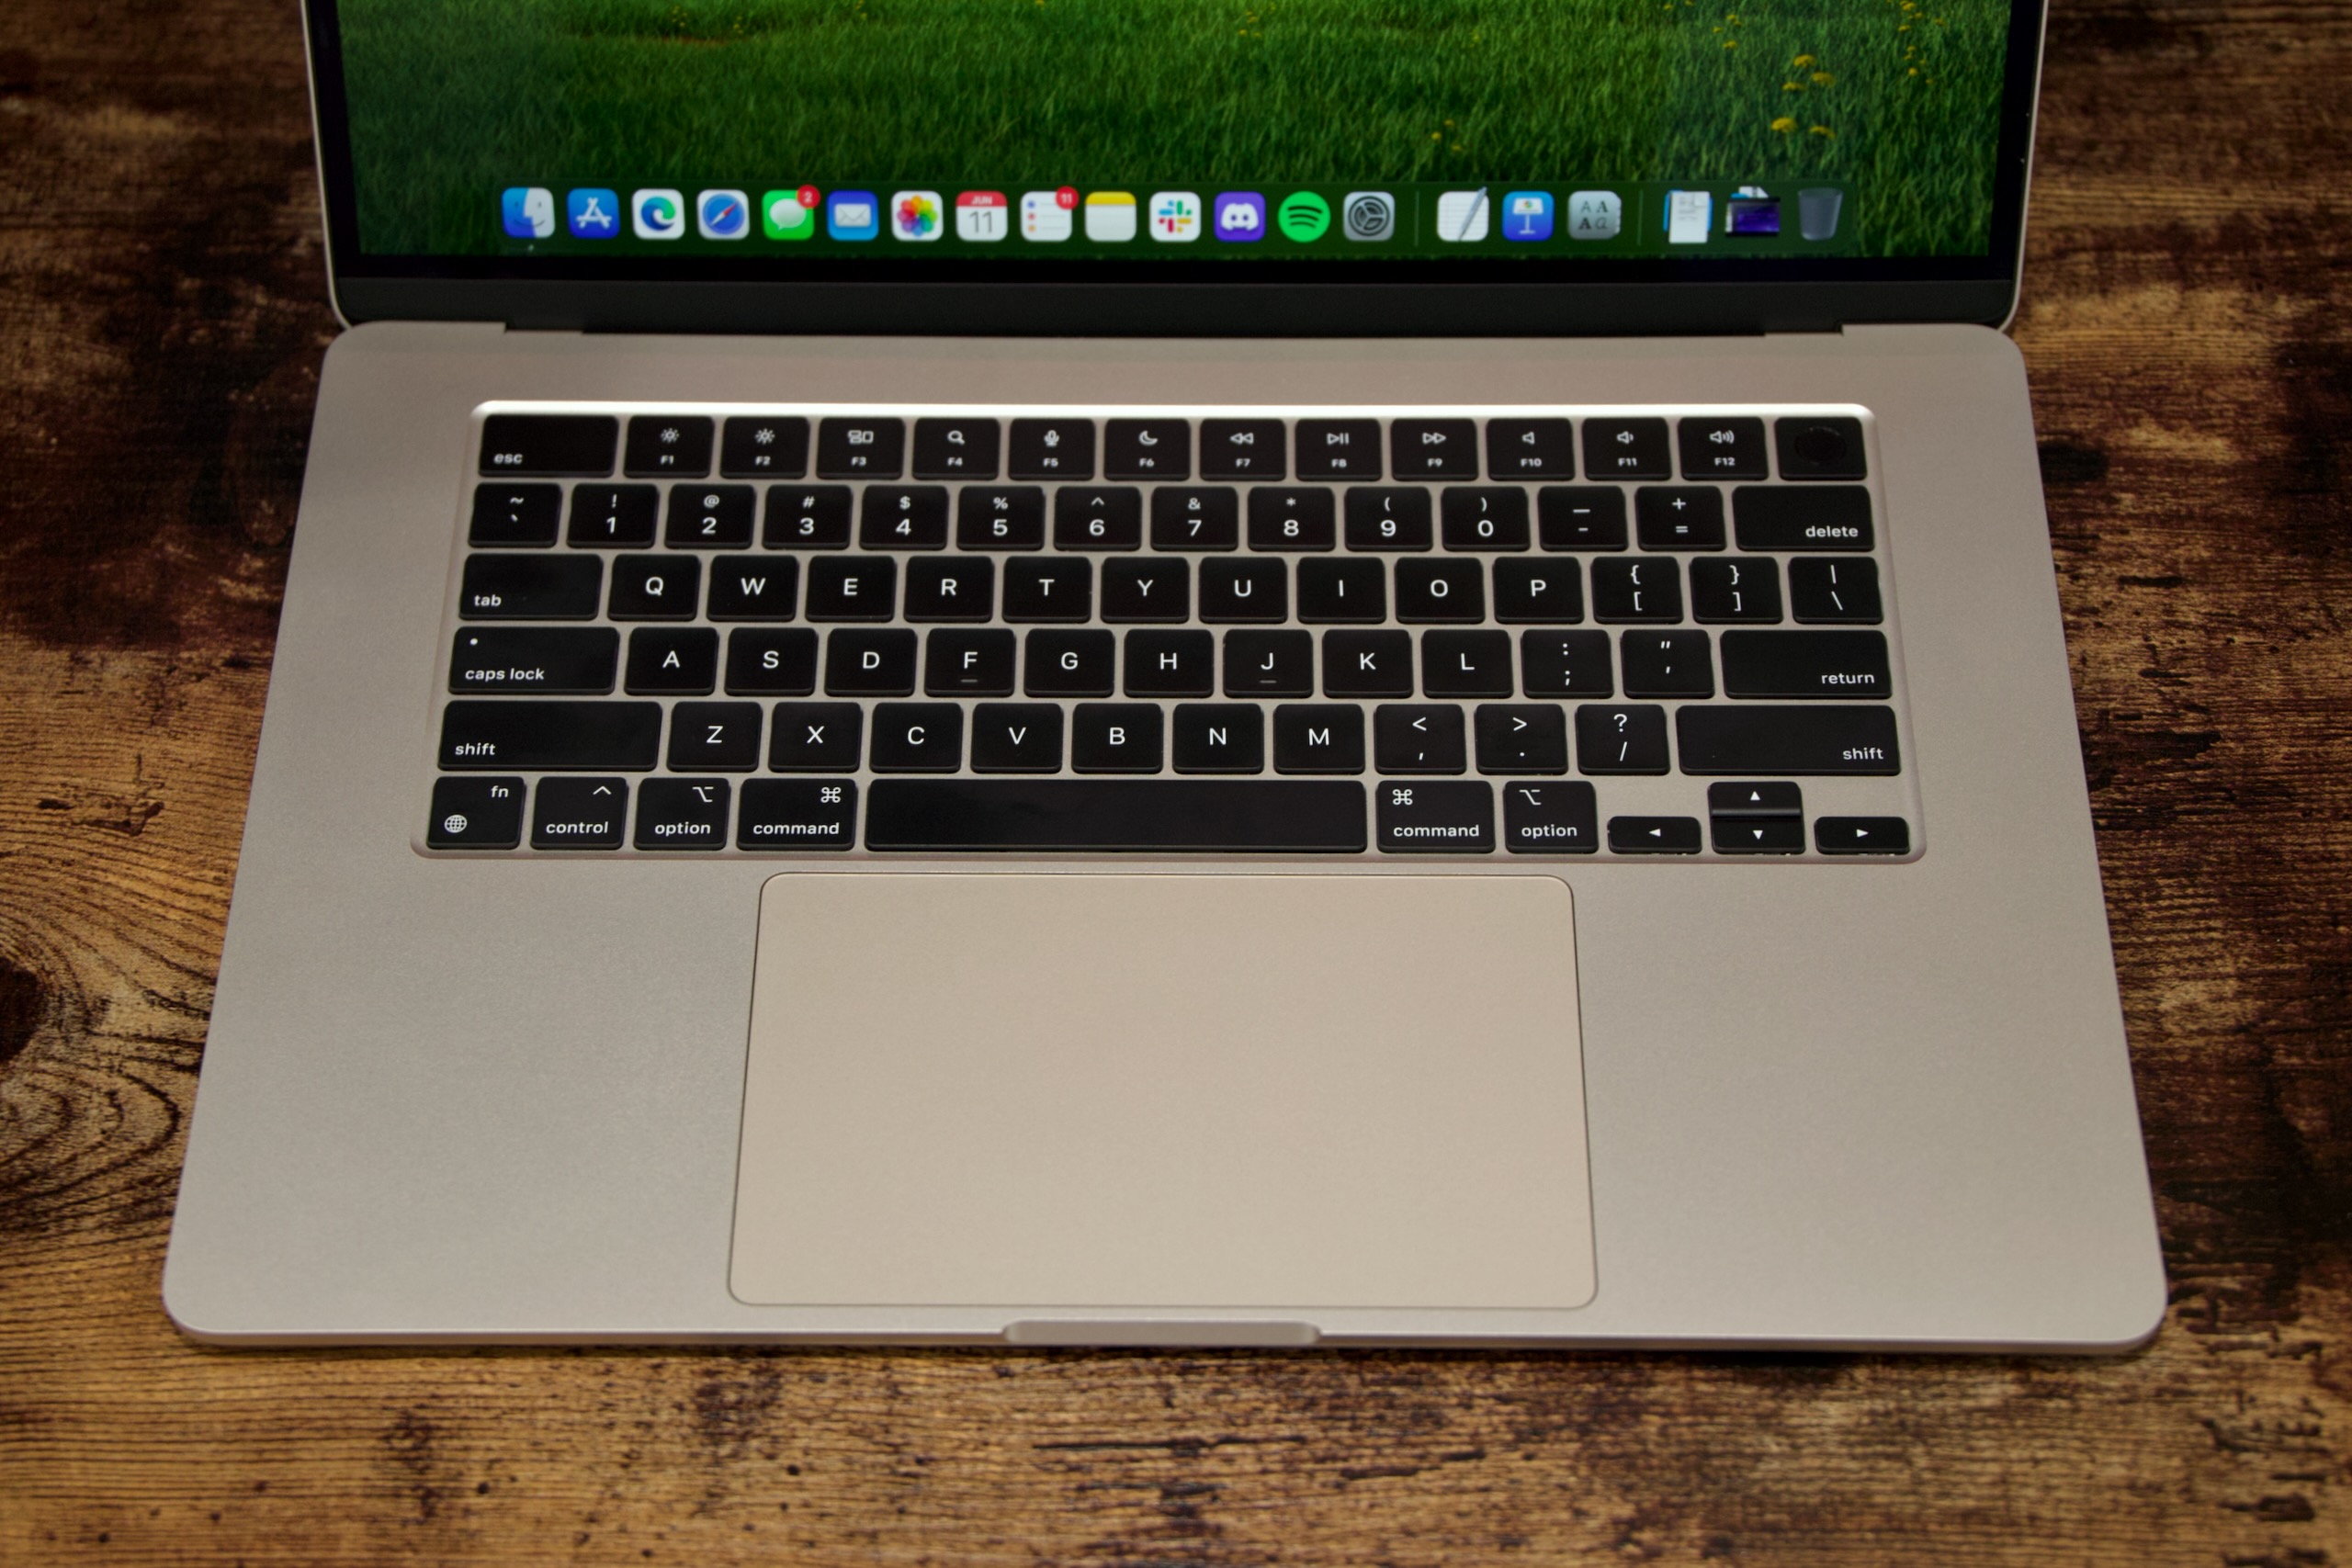 Apple's rumored 15-inch MacBook Air is long overdue